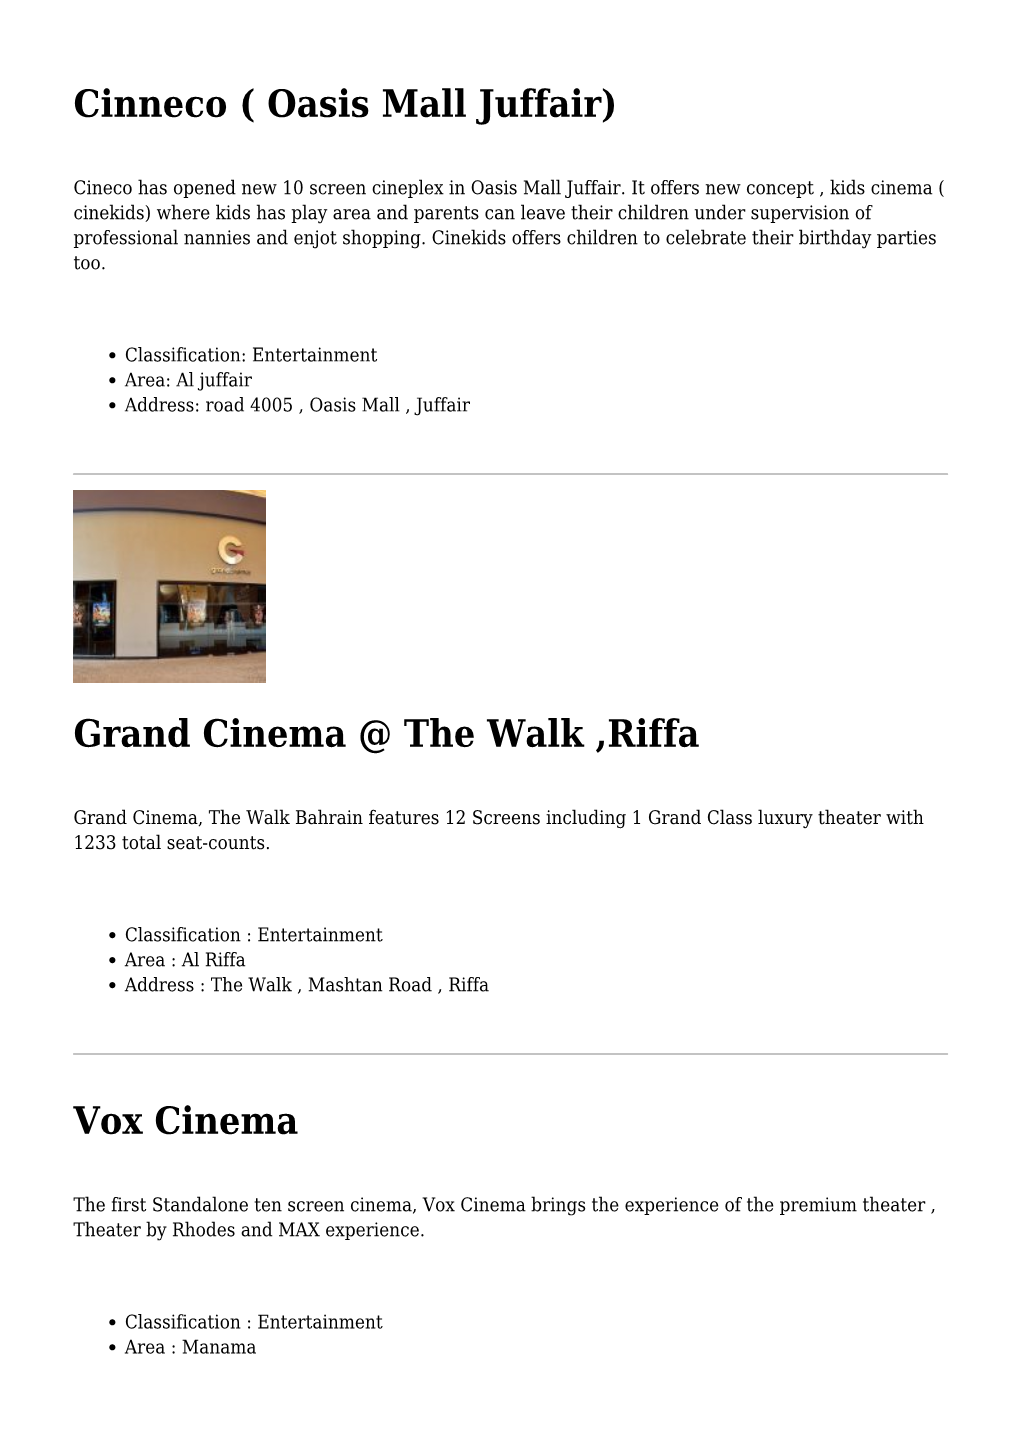 Cinneco ( Oasis Mall Juffair),Grand Cinema @ the Walk ,Riffa,Vox